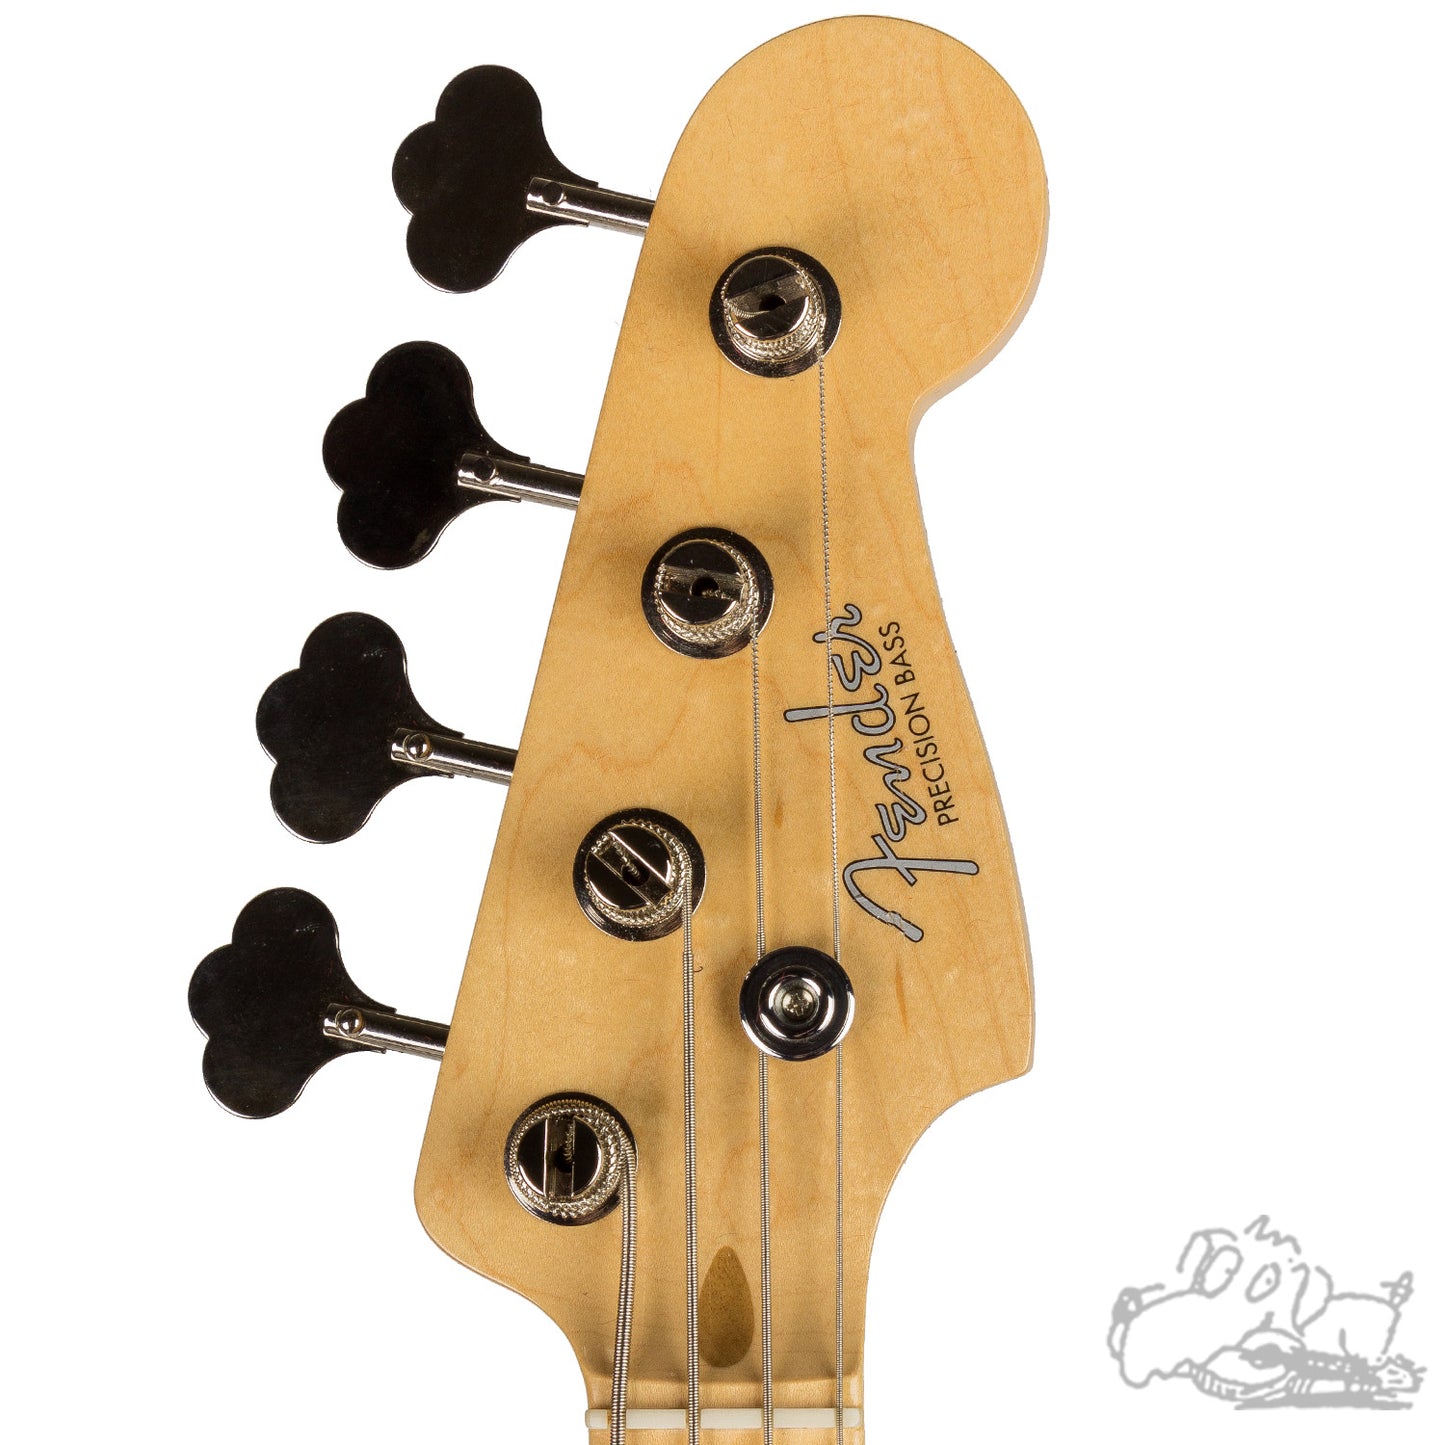 2013 American Vintage Reissue 1958 Precision Bass